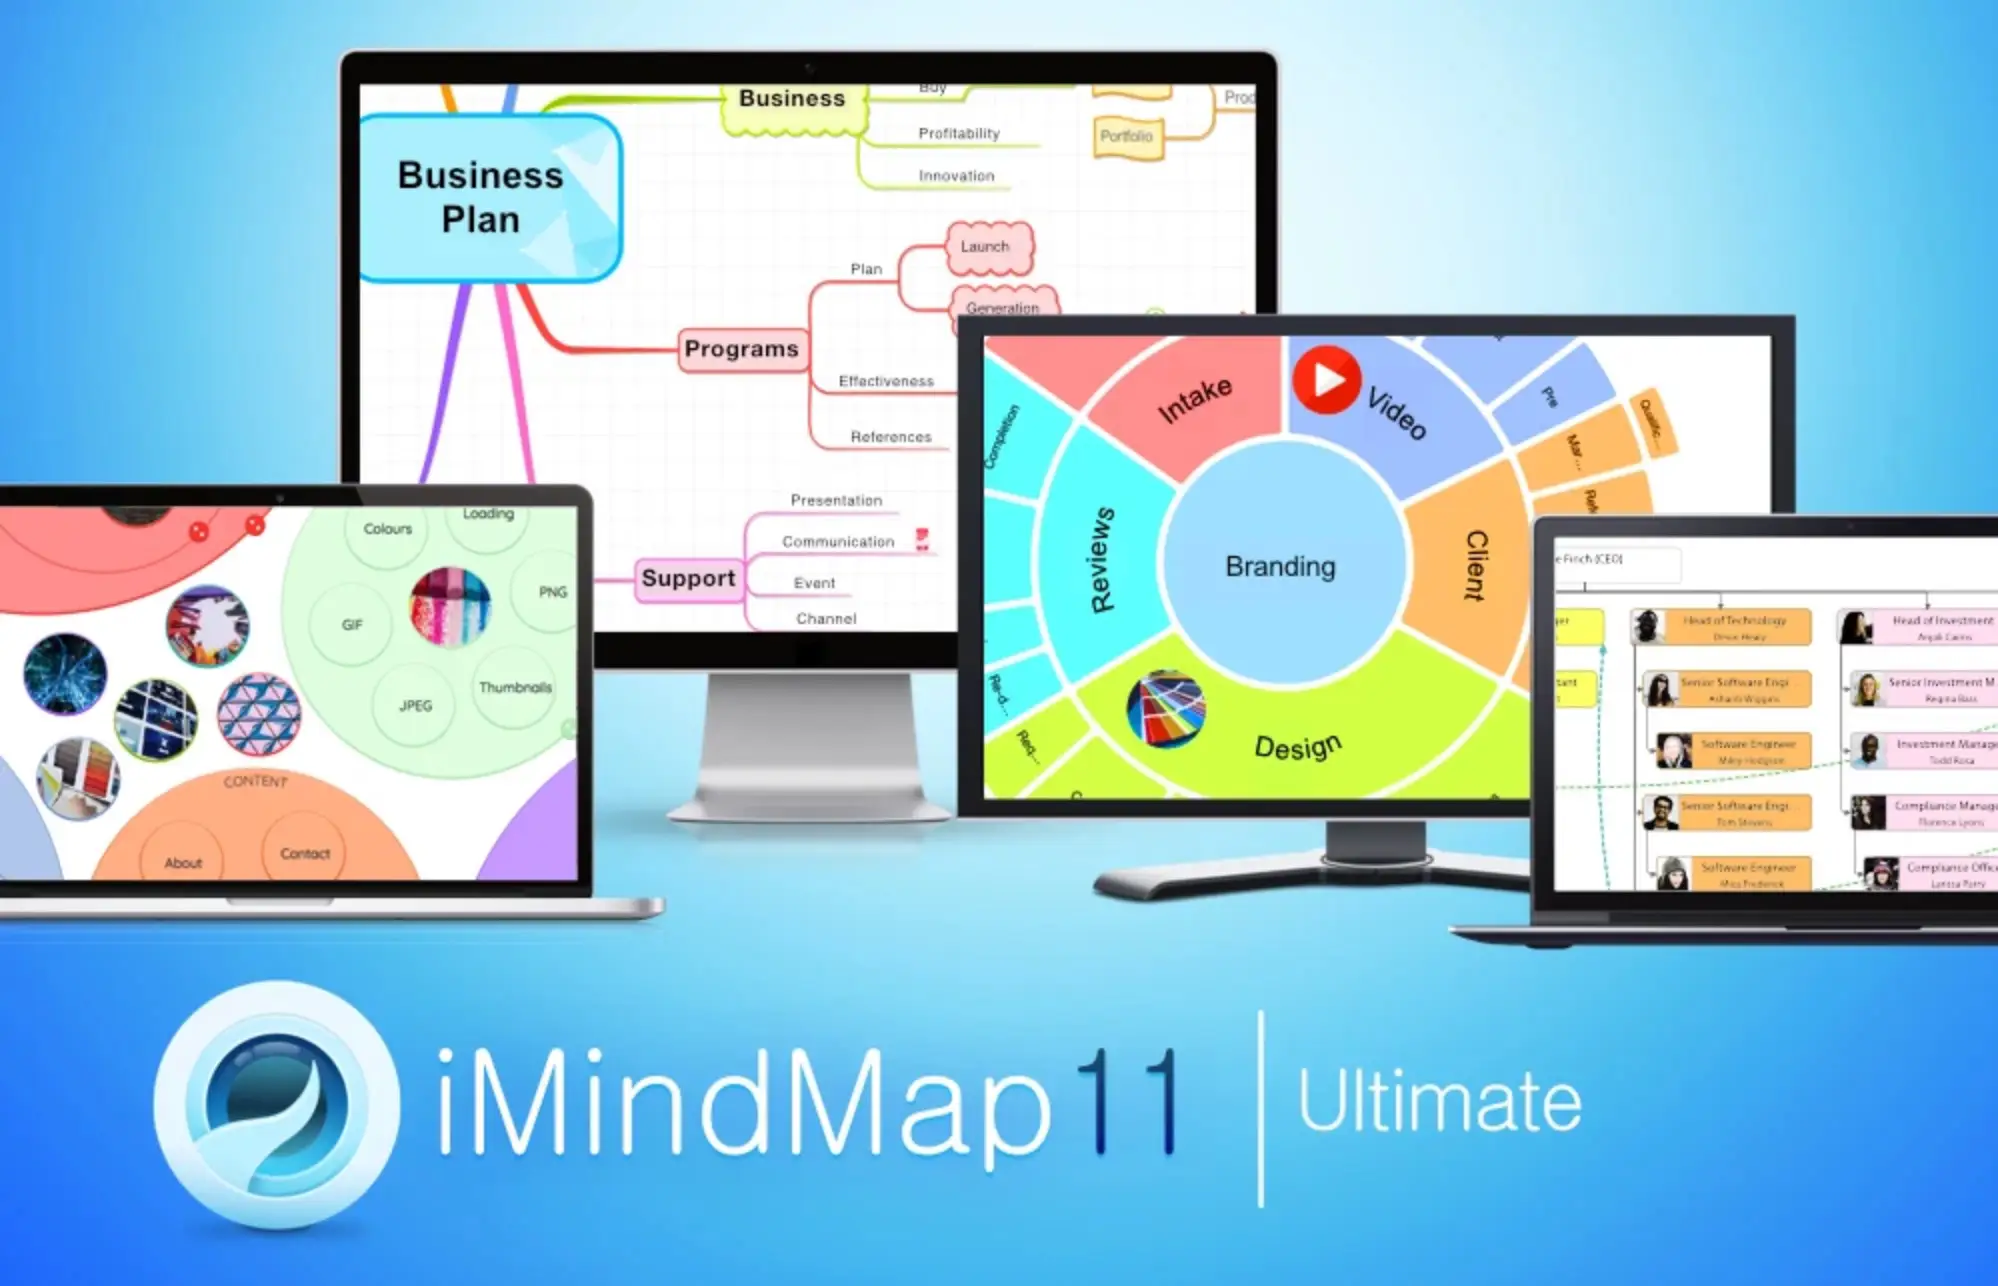 Imindmap Ultimate V10.1.1 Portable Best Free Mind Mapping Software